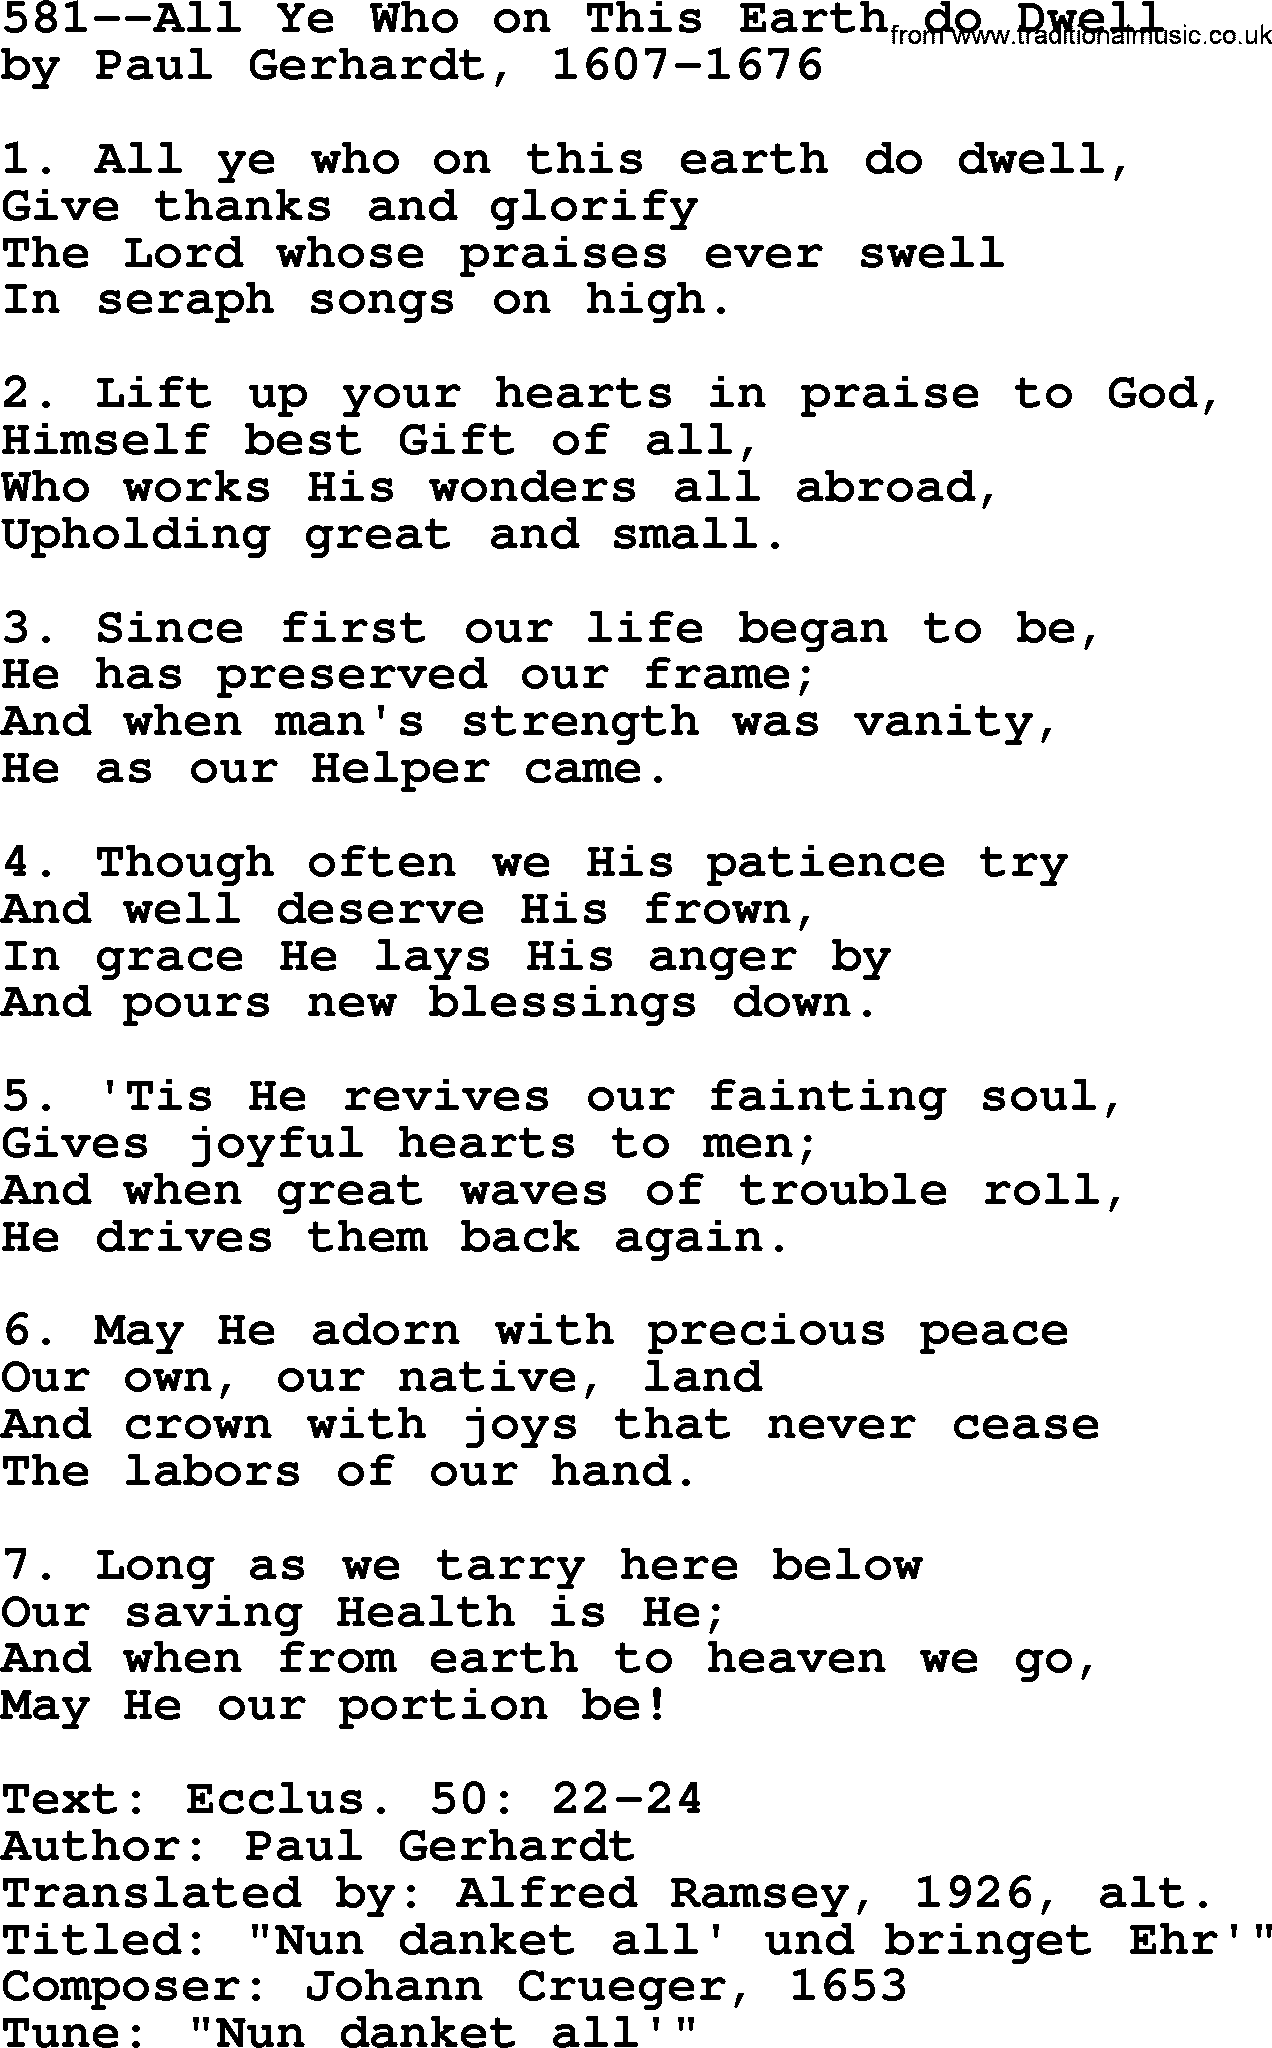 Lutheran Hymn: 581--All Ye Who on This Earth do Dwell.txt lyrics with PDF